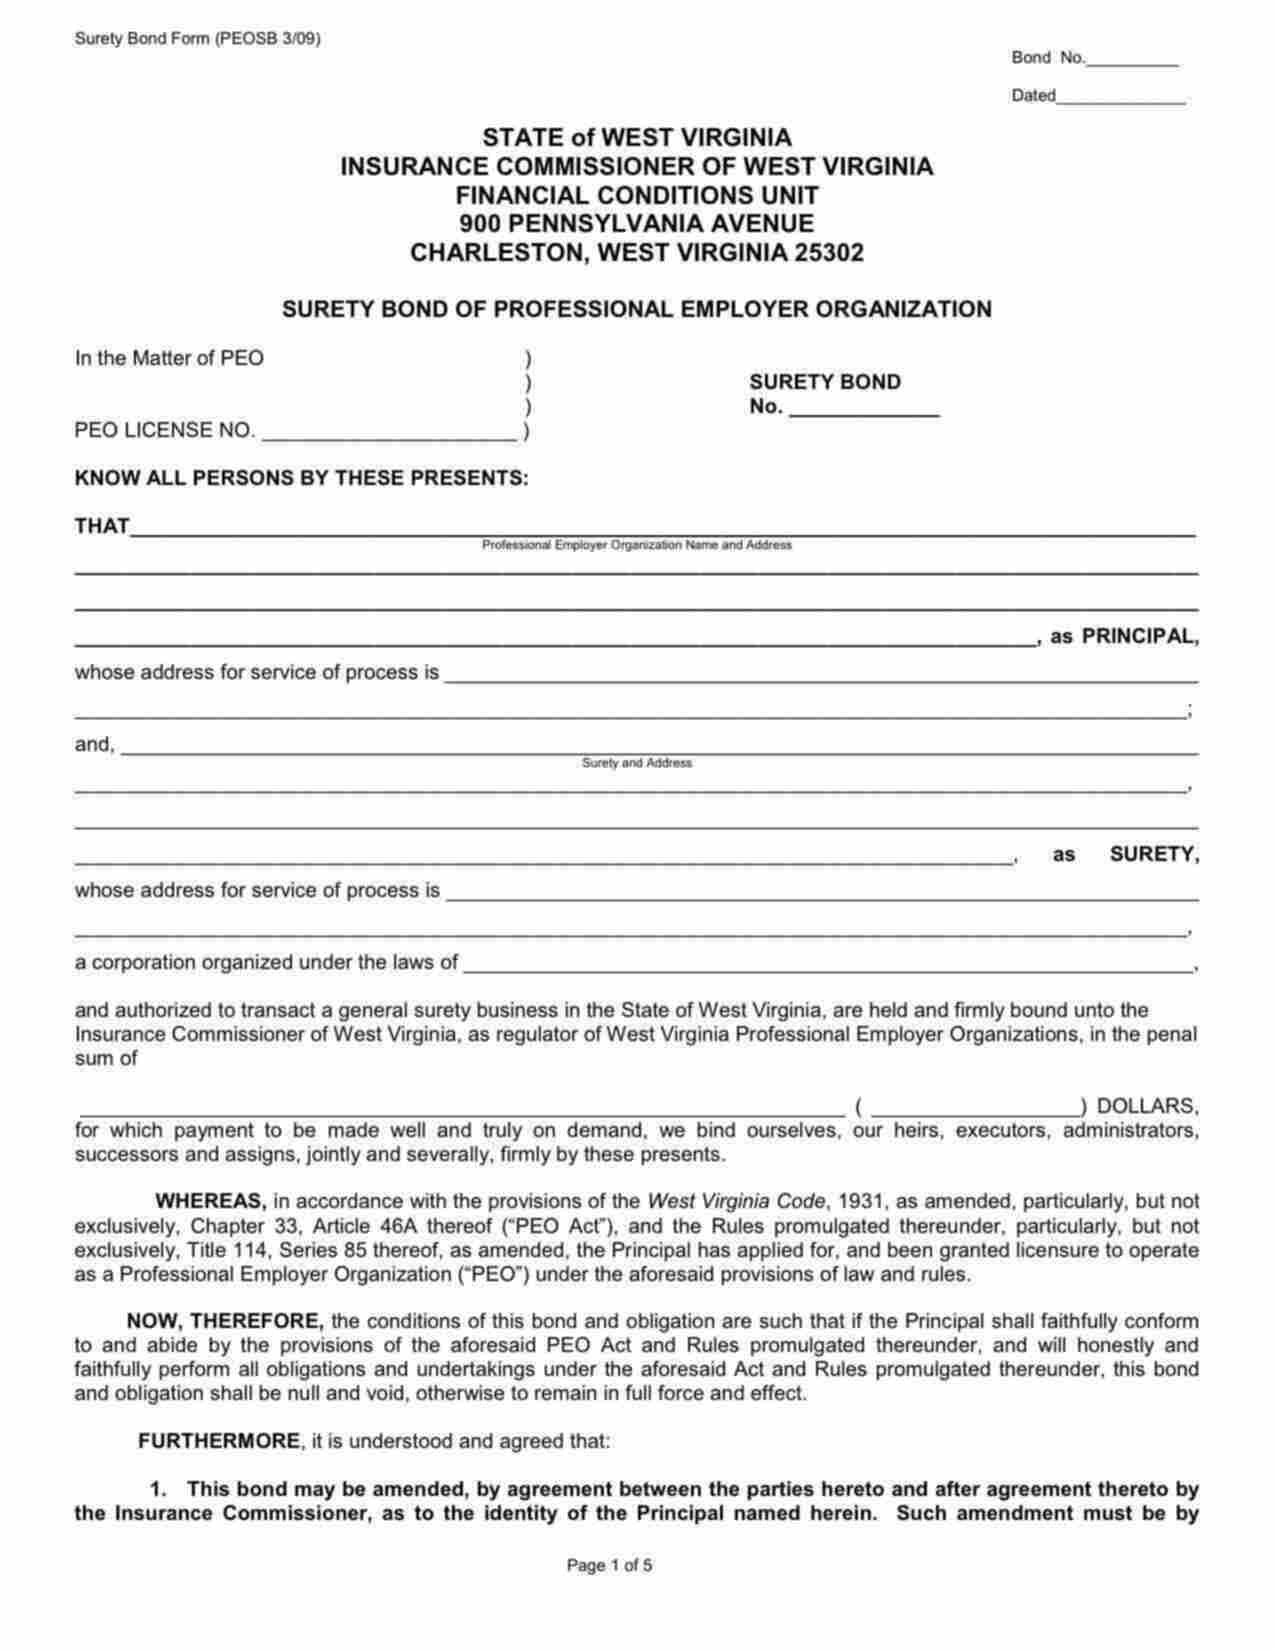 West Virginia Professional Employer Organization Bond Form